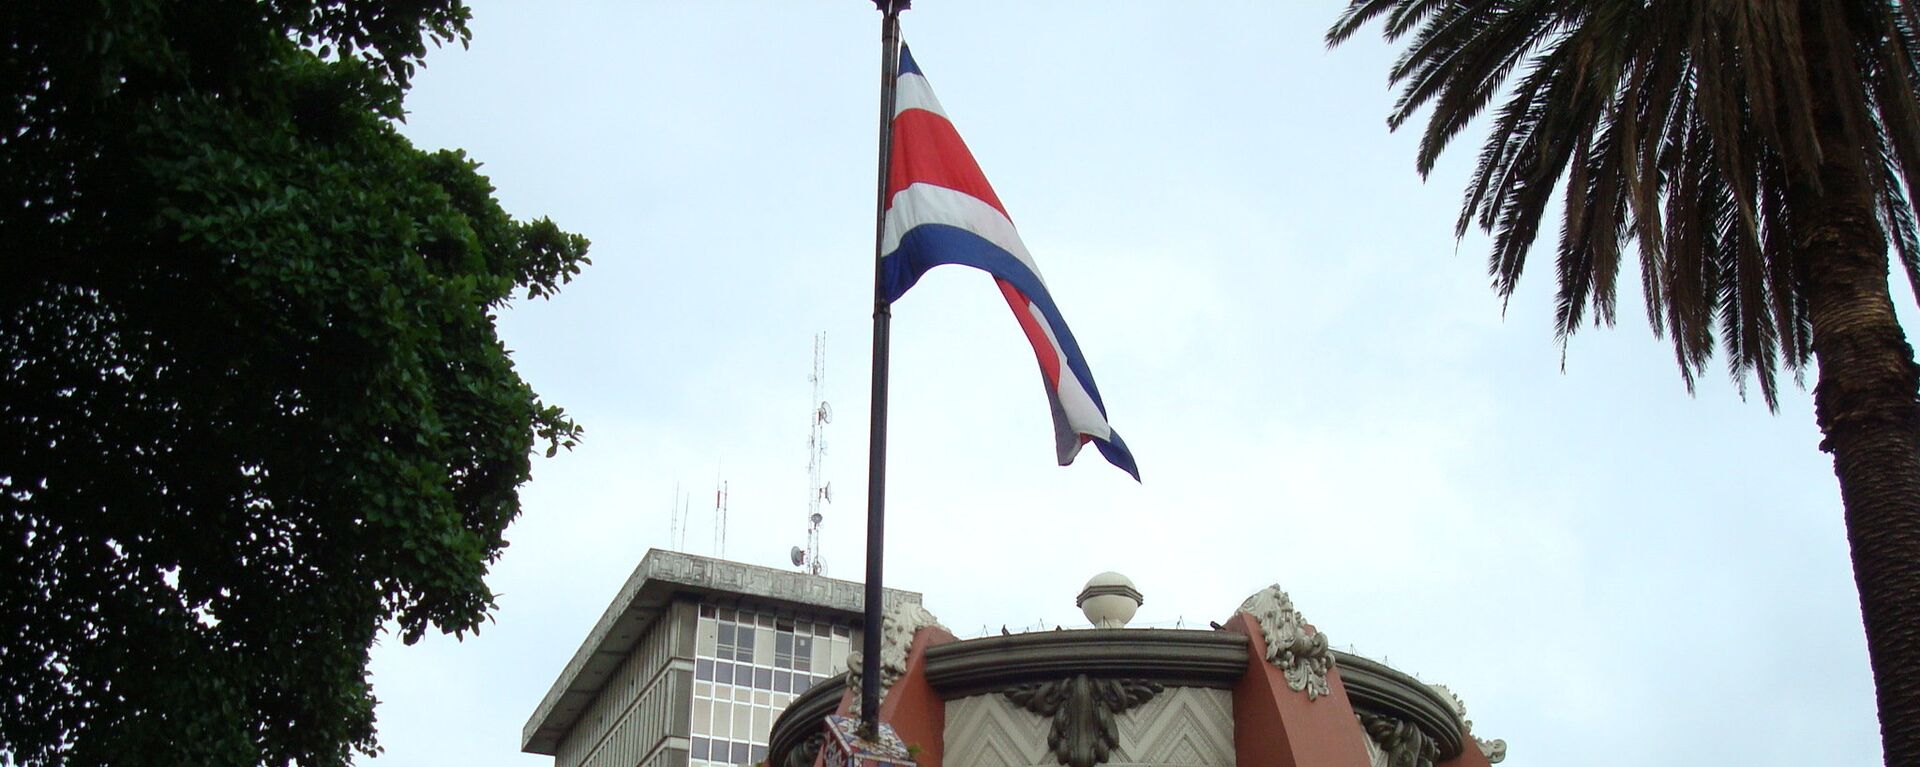 La bandera de Costa Rica en San José, la capital del país - Sputnik Mundo, 1920, 08.11.2021